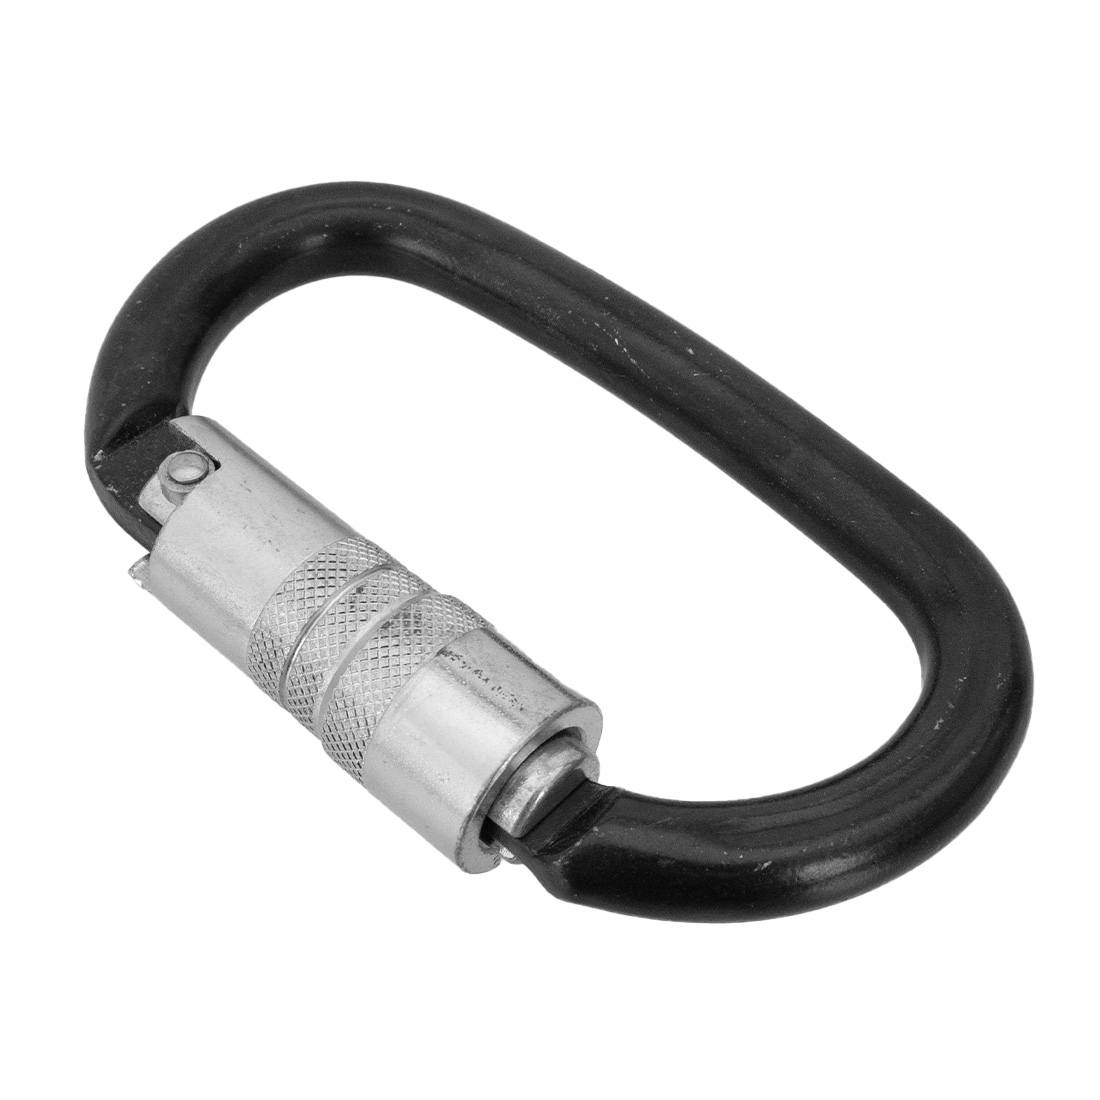 KONG ANSI Ovalone Carbon Steel Twist Lock Carabiner, High-Rise